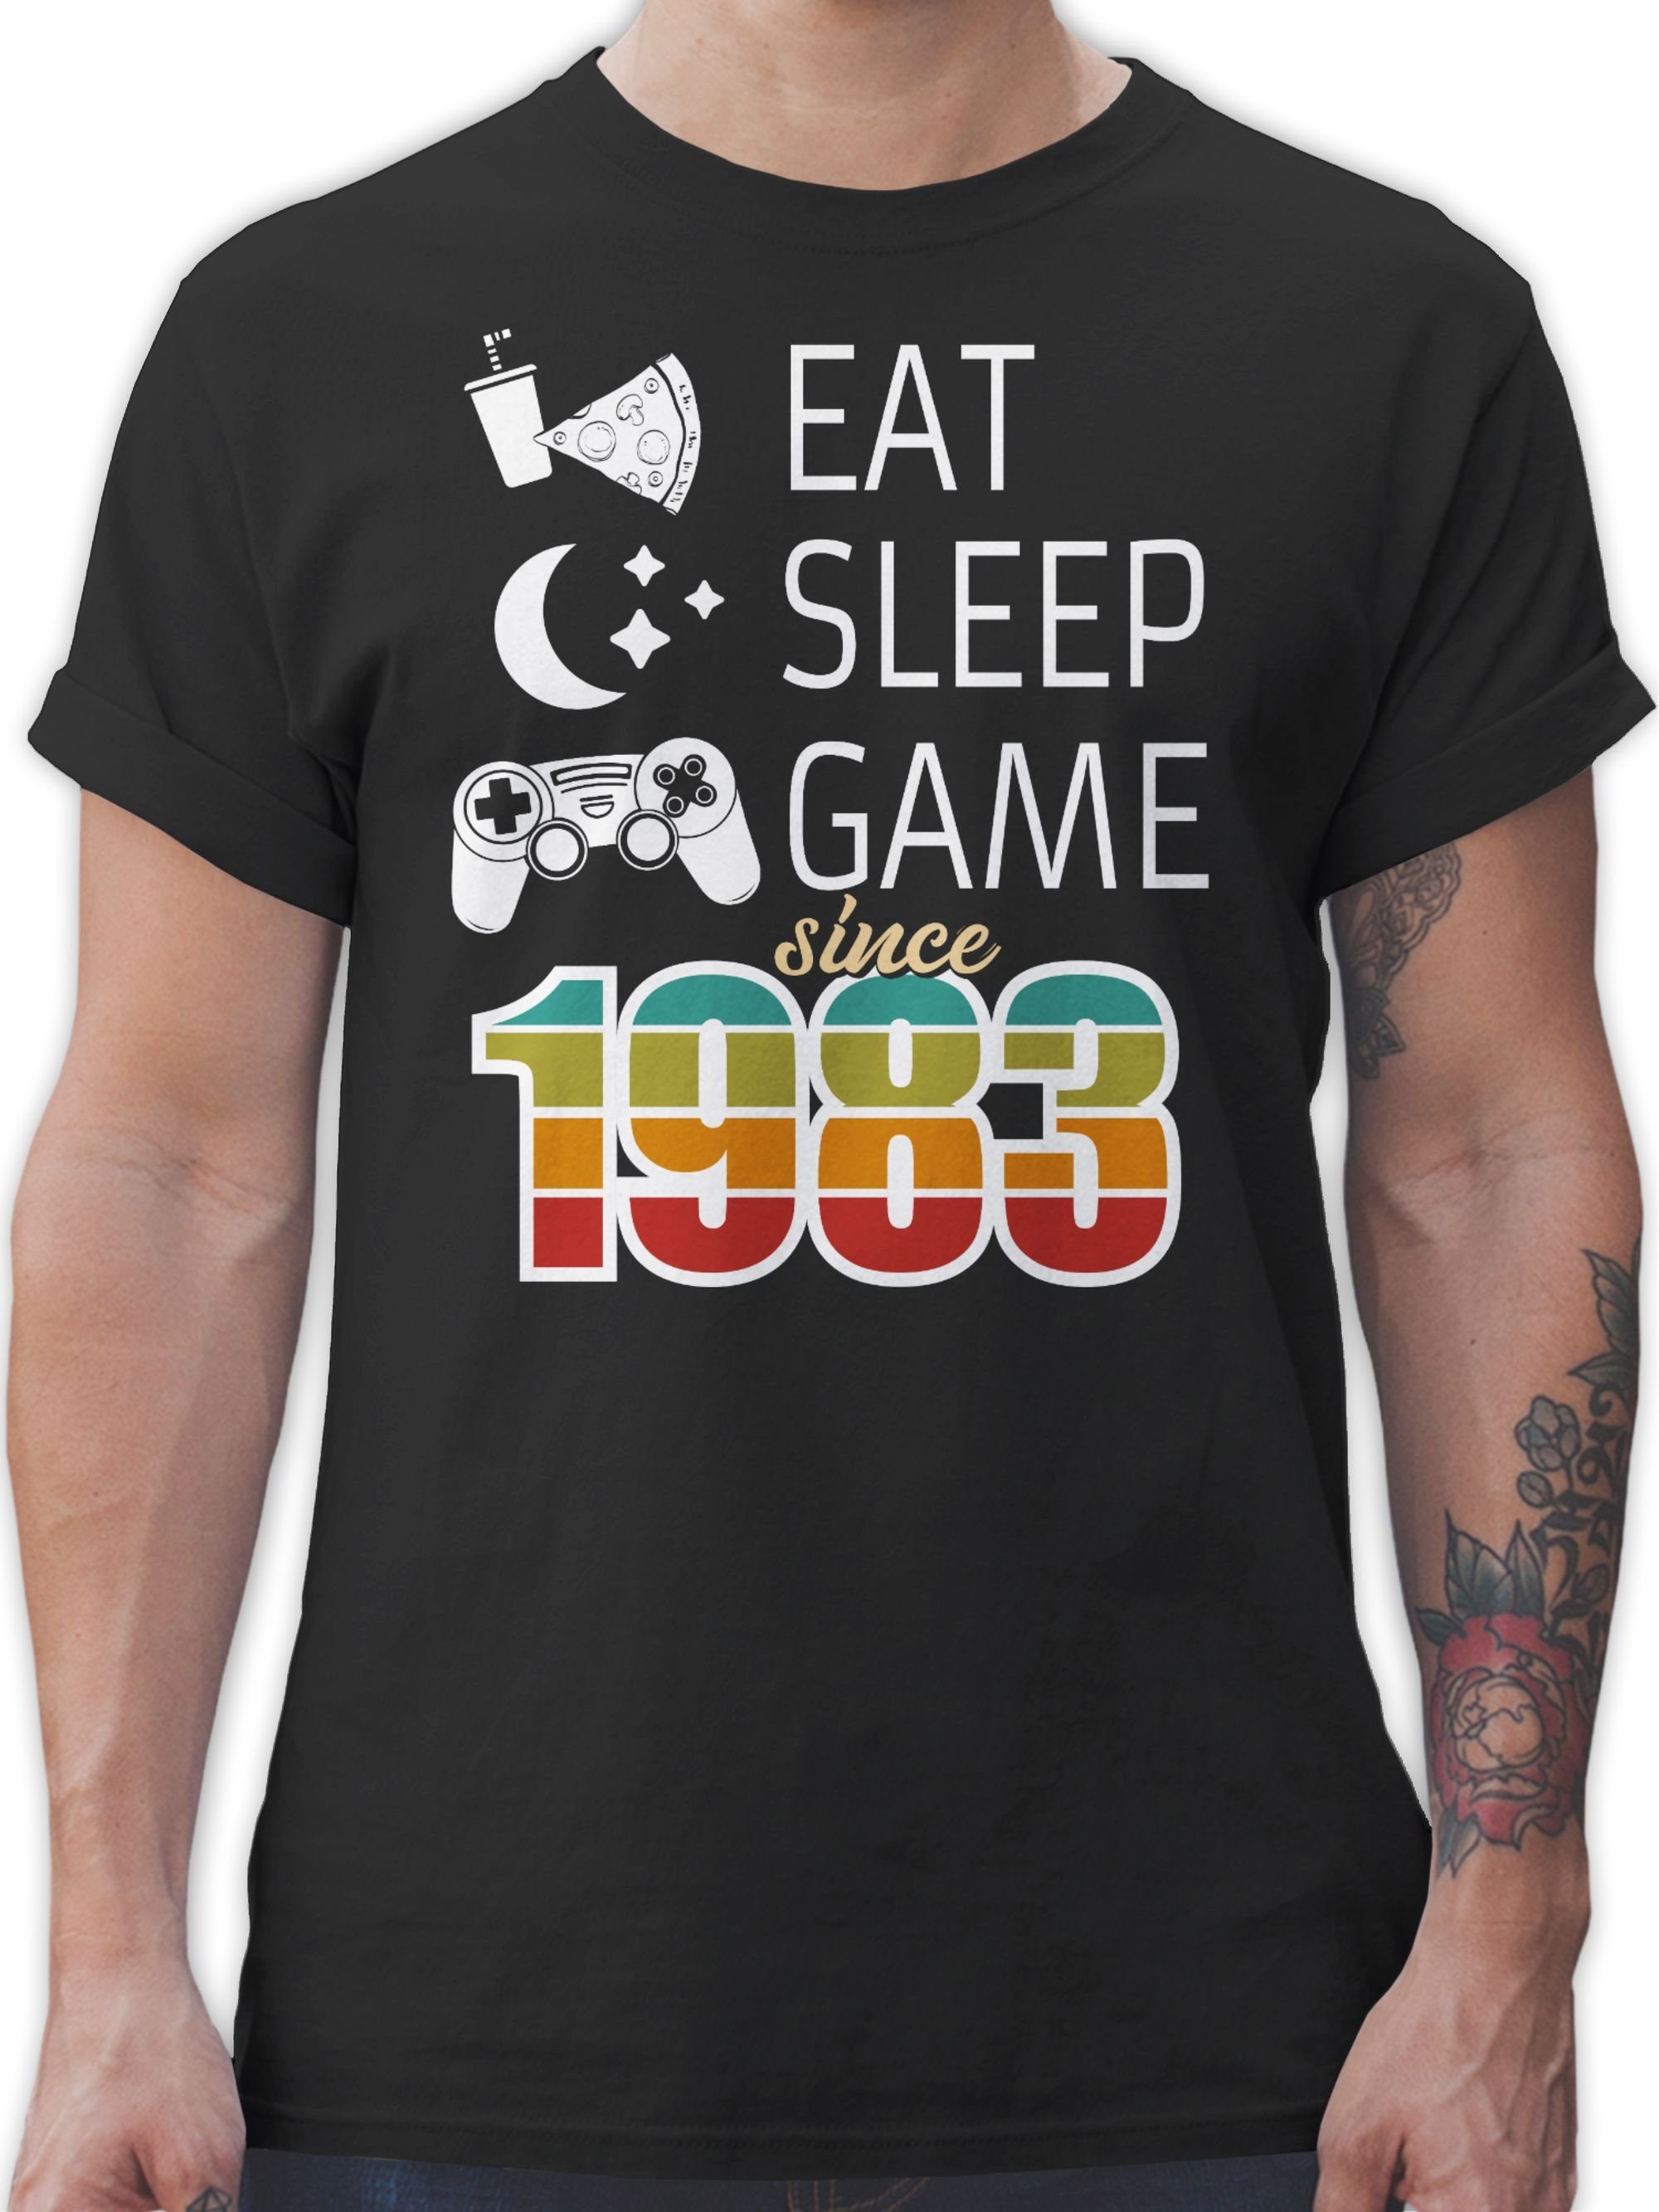 Shirtracer T-Shirt Eat sleep Game since 1983 bunt 40. Geburtstag 01 Schwarz